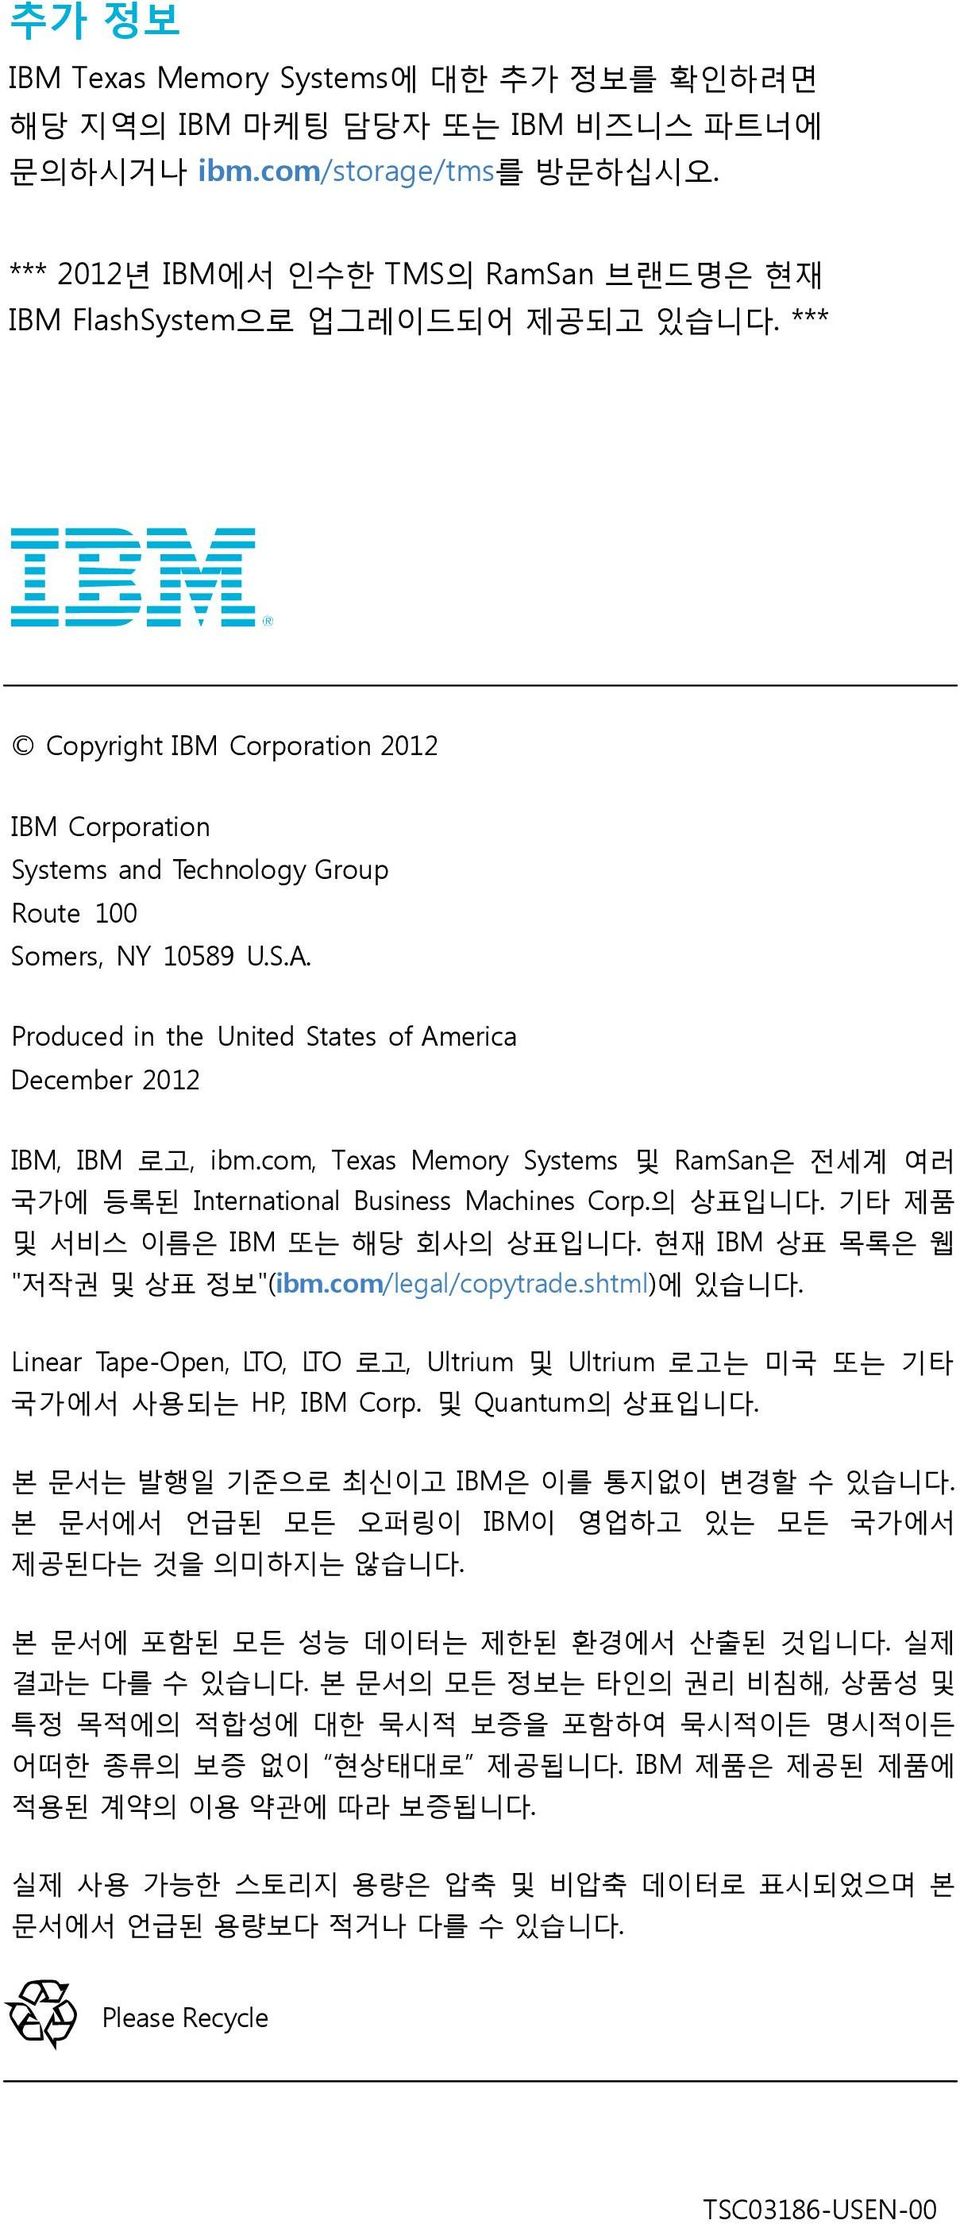 com, Texas Memory Systems 및 RamSan은 전세계 여러 국가에 등록된 International Business Machines Corp.의 상표입니다. 기타 제품 및 서비스 이름은 IBM 또는 해당 회사의 상표입니다. 현재 IBM 상표 목록은 웹 "저작권 및 상표 정보"(ibm.com/legal/copytrade.